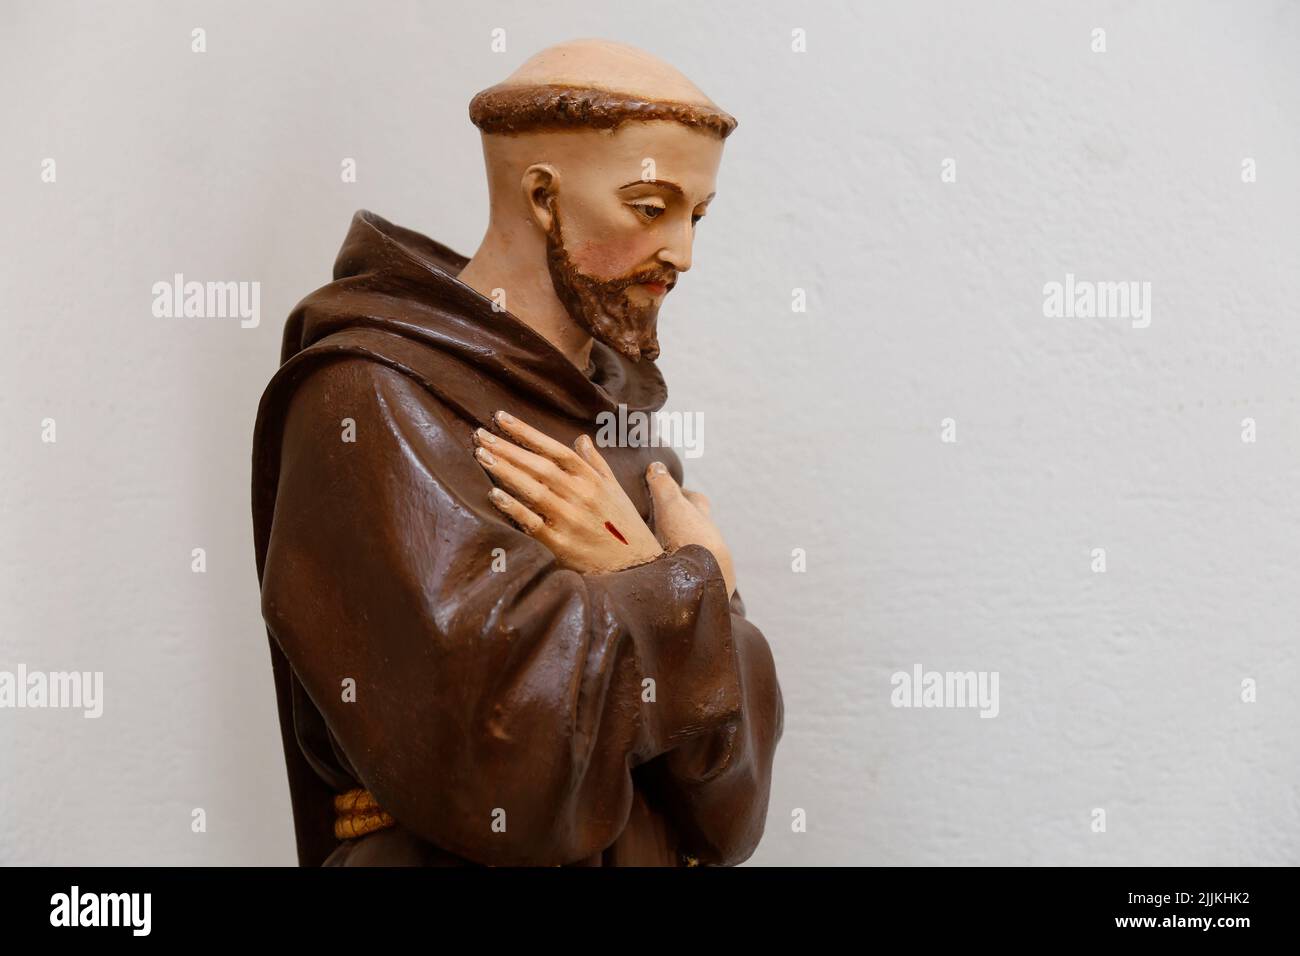 Saint Francis of Assisi of the Catholic Church - St Francis Stock Photo